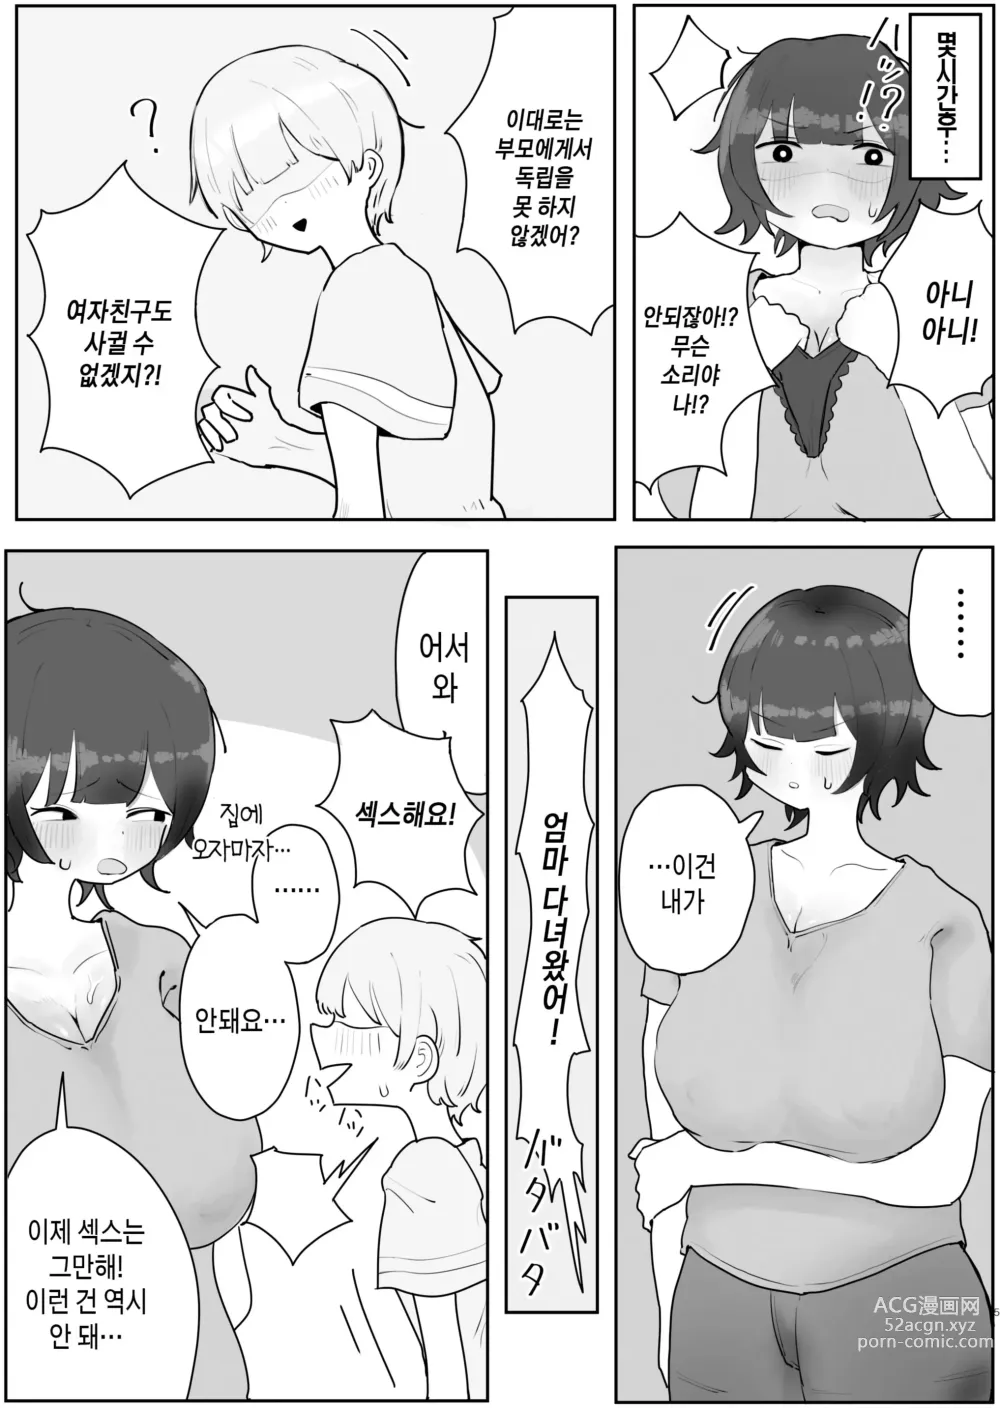 Page 5 of doujinshi 아들의 거근에 유혹되어 매일 땀범벅 섹스해 버리는 엄마의 이야기 2-3